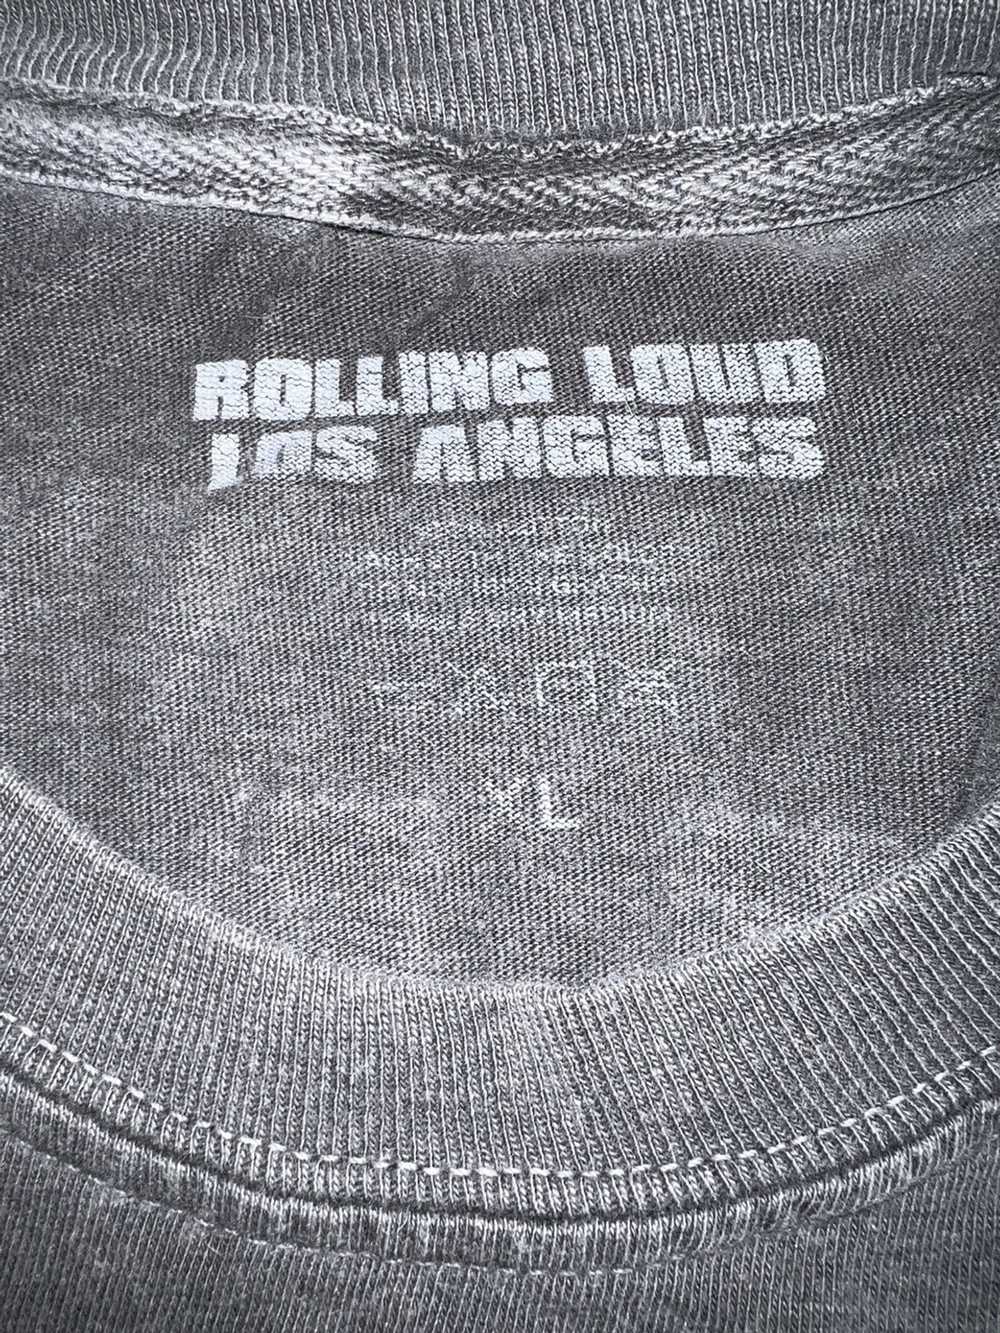 Rolling Loud Rolling Loud La 2019 3 Peat Shirt - image 4